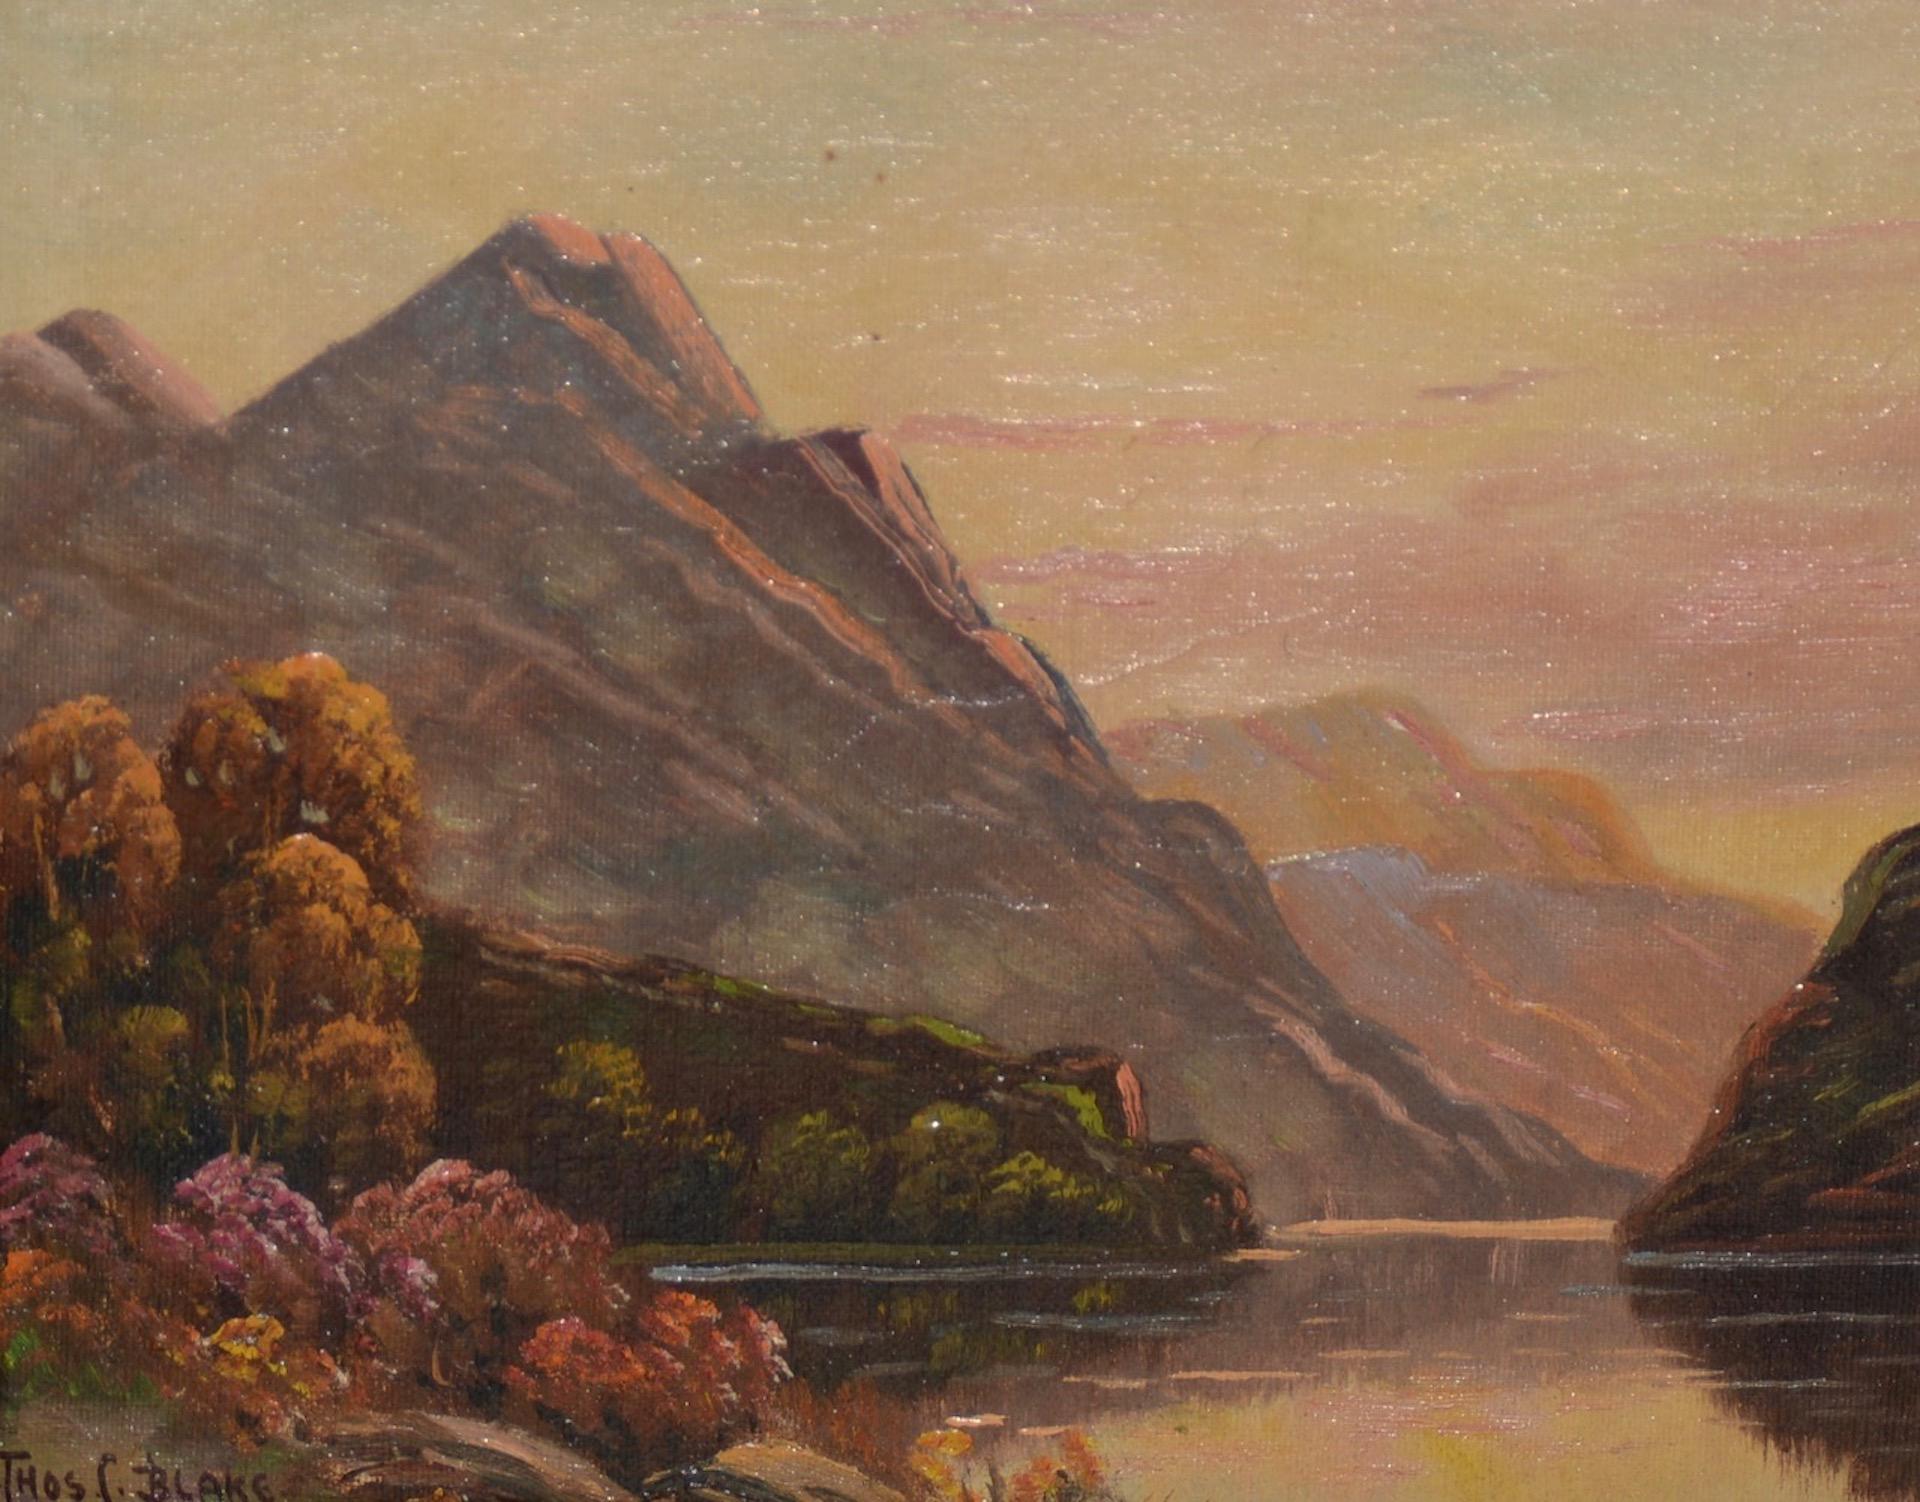 Thomas C. blake luminous mountain landscape oil painting, circa 1920

Fine mountain landscape by listed American / English artist Thomas C. Blake (b.1890)

Original oil on artist canvas board.

Dimensions: 8